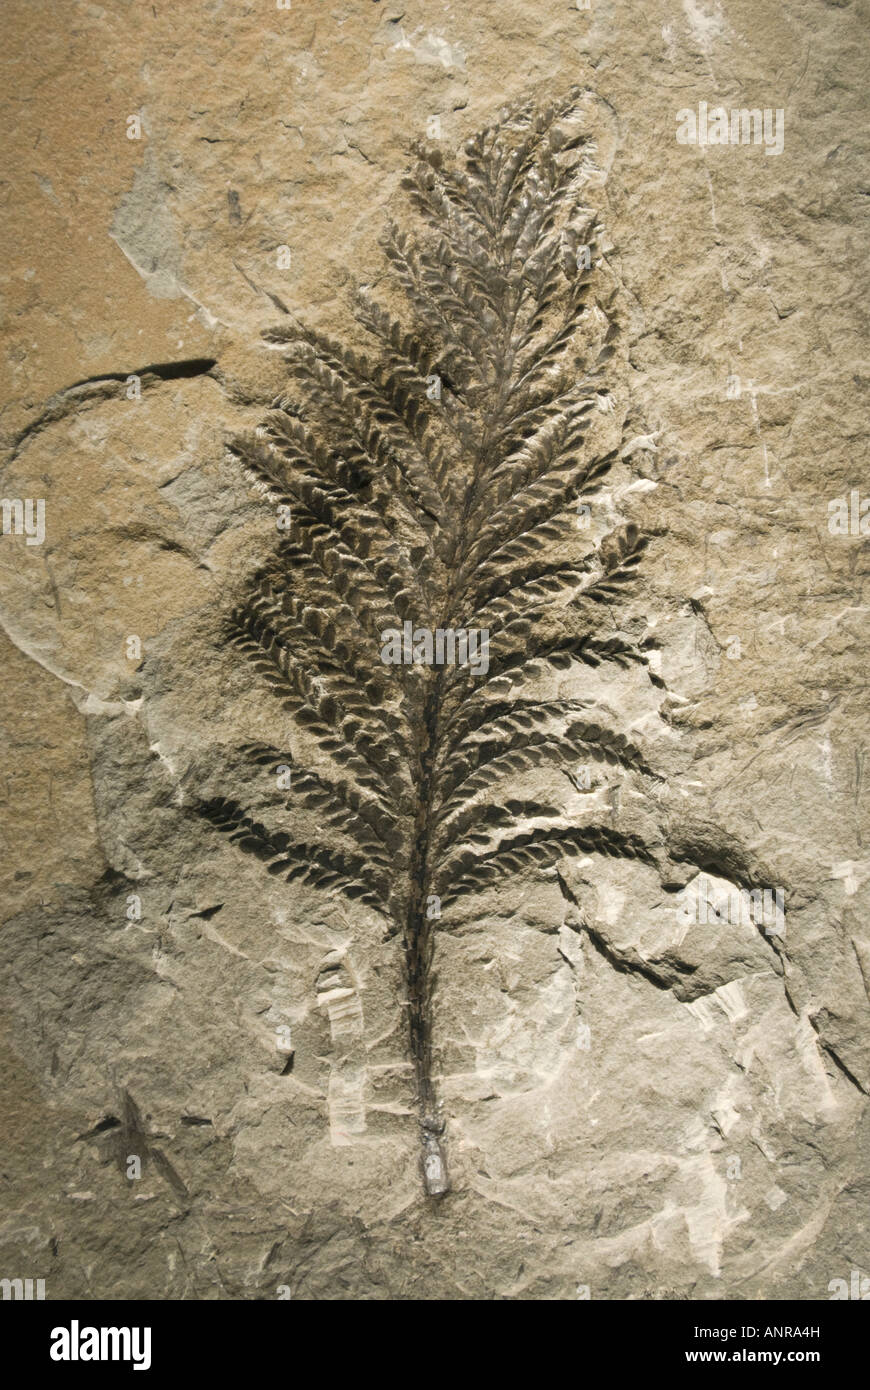 Fosil de plantas fotografías e imágenes de alta resolución - Alamy